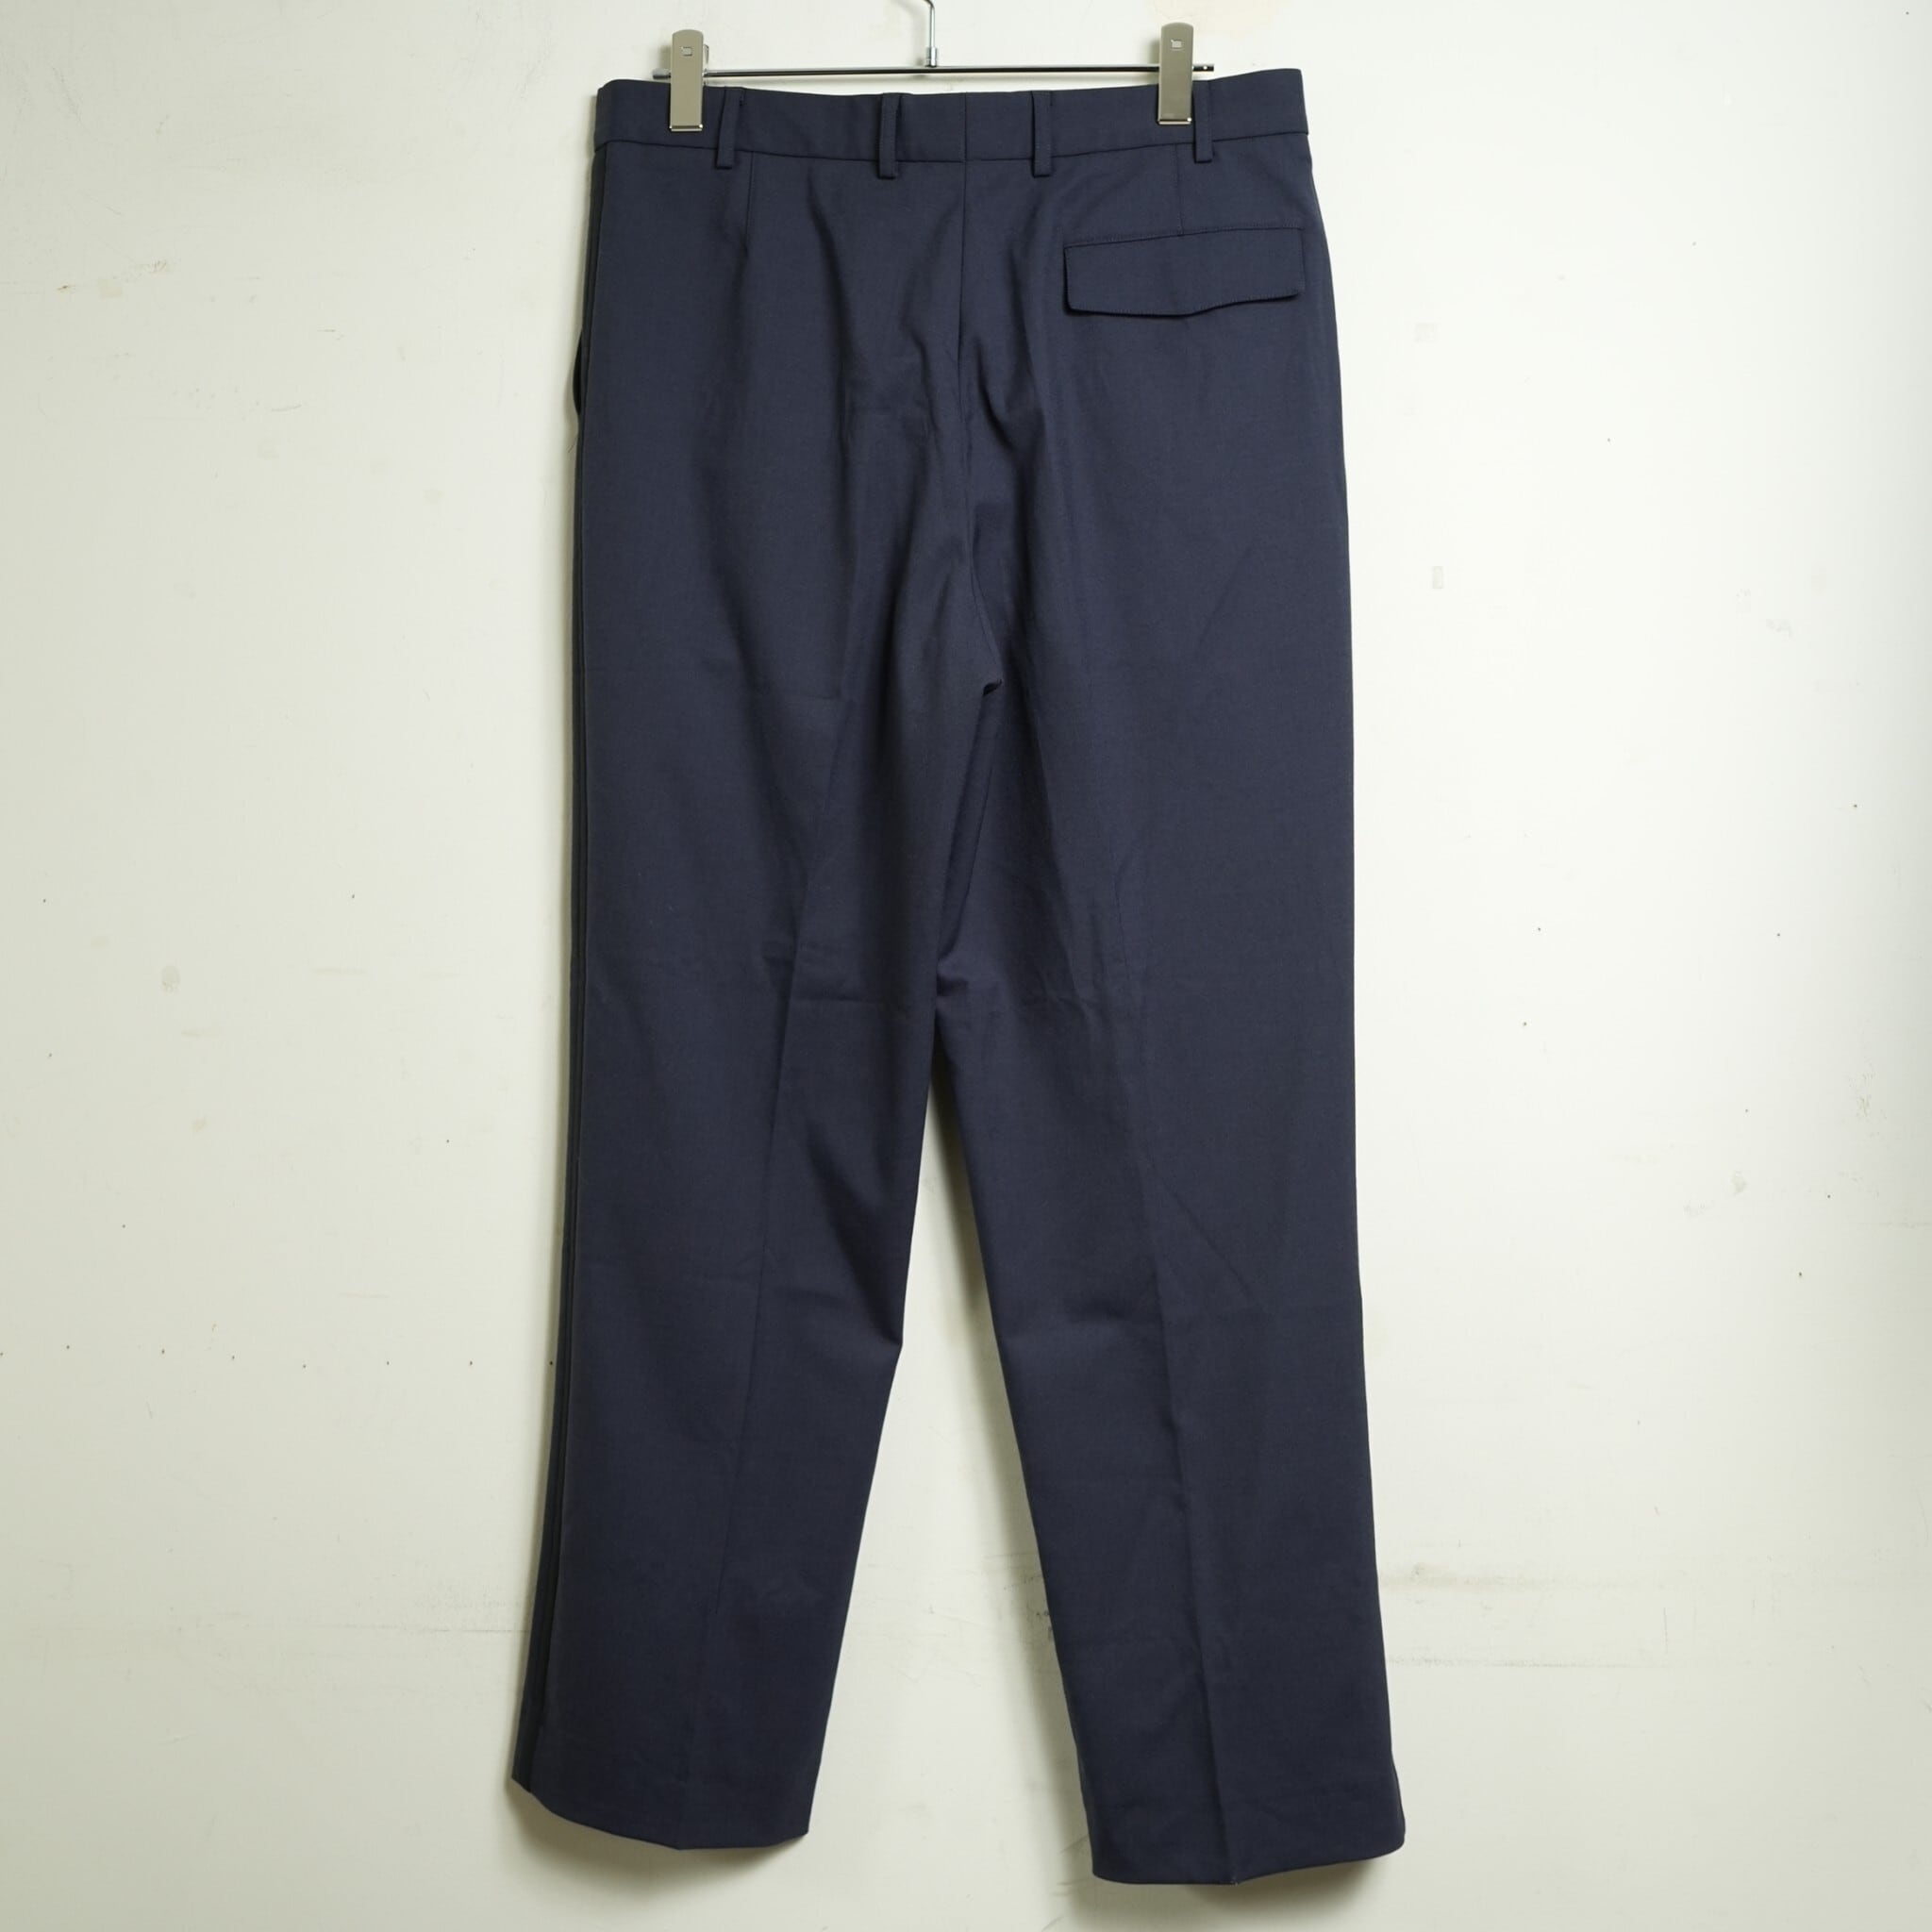 80s vintage sideline pants